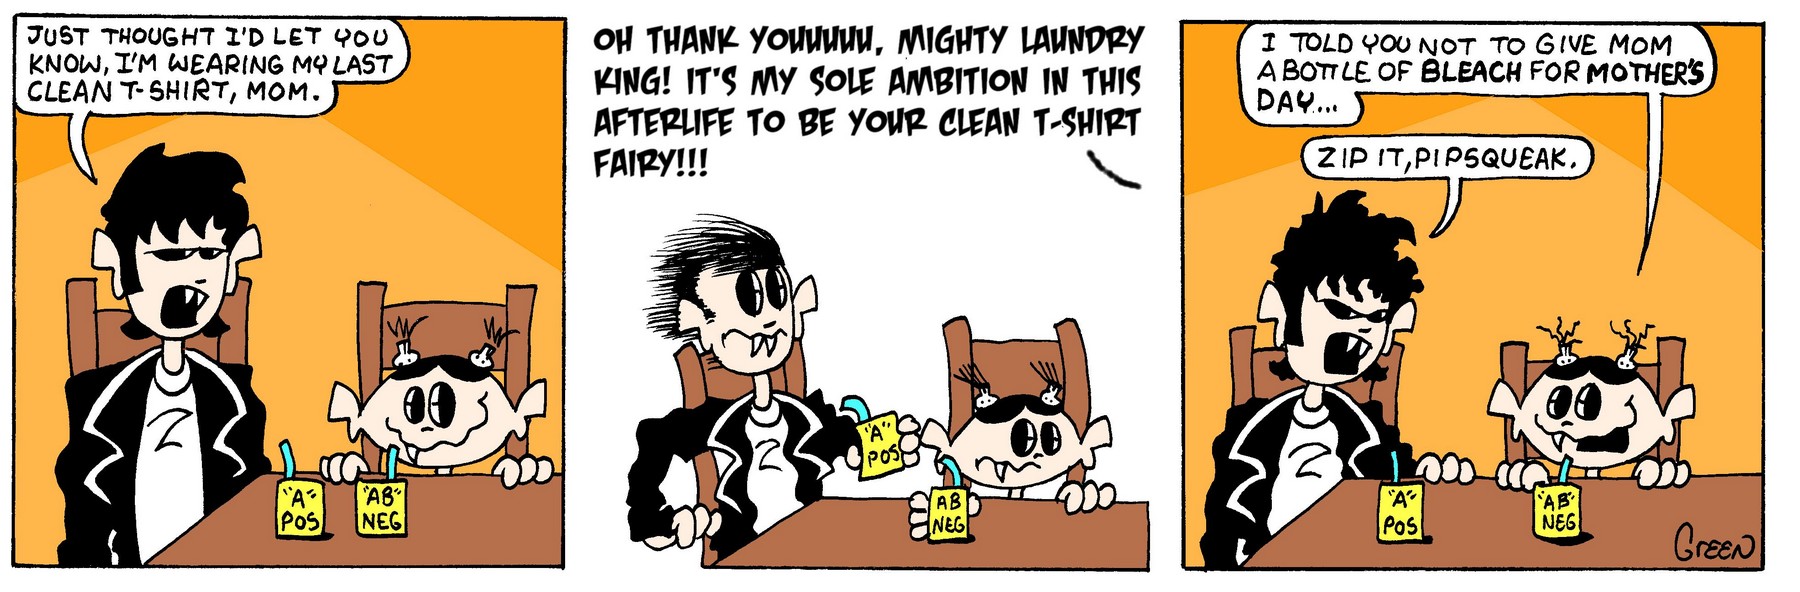 Laundry King